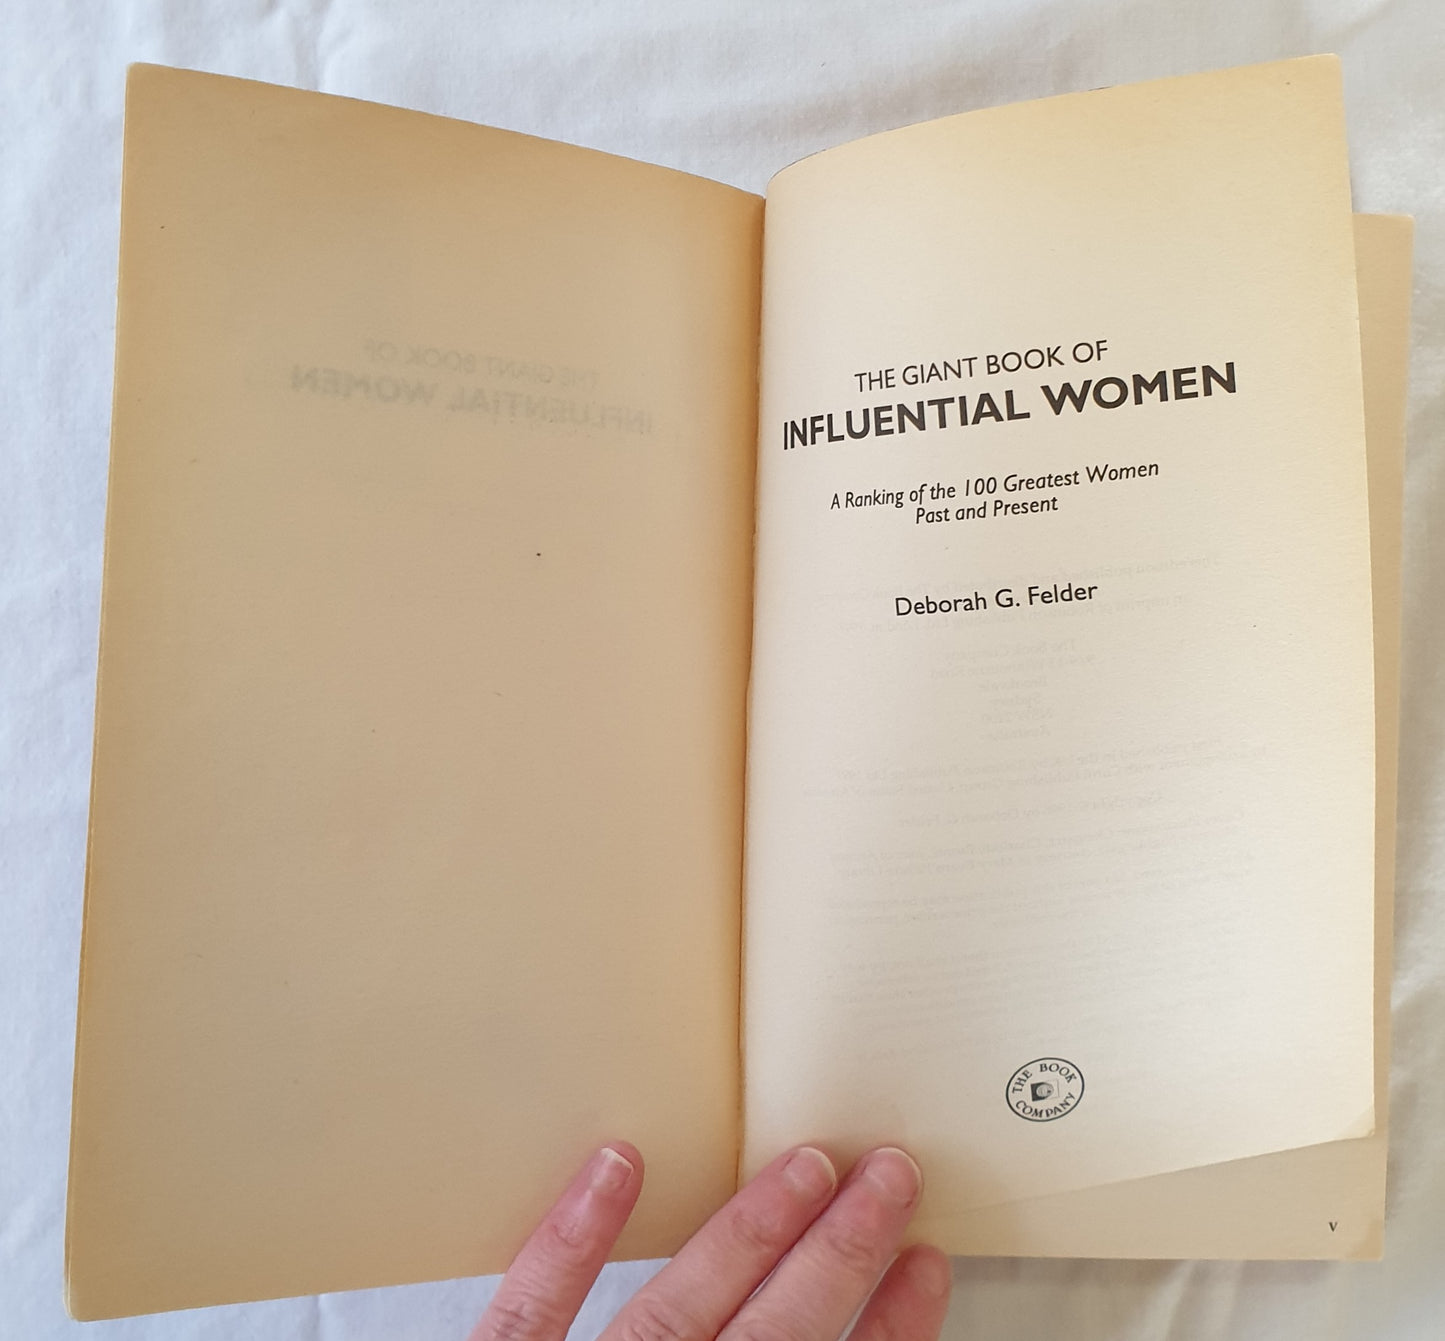 The Giant Book of Influential Women by Deborah G. Felder